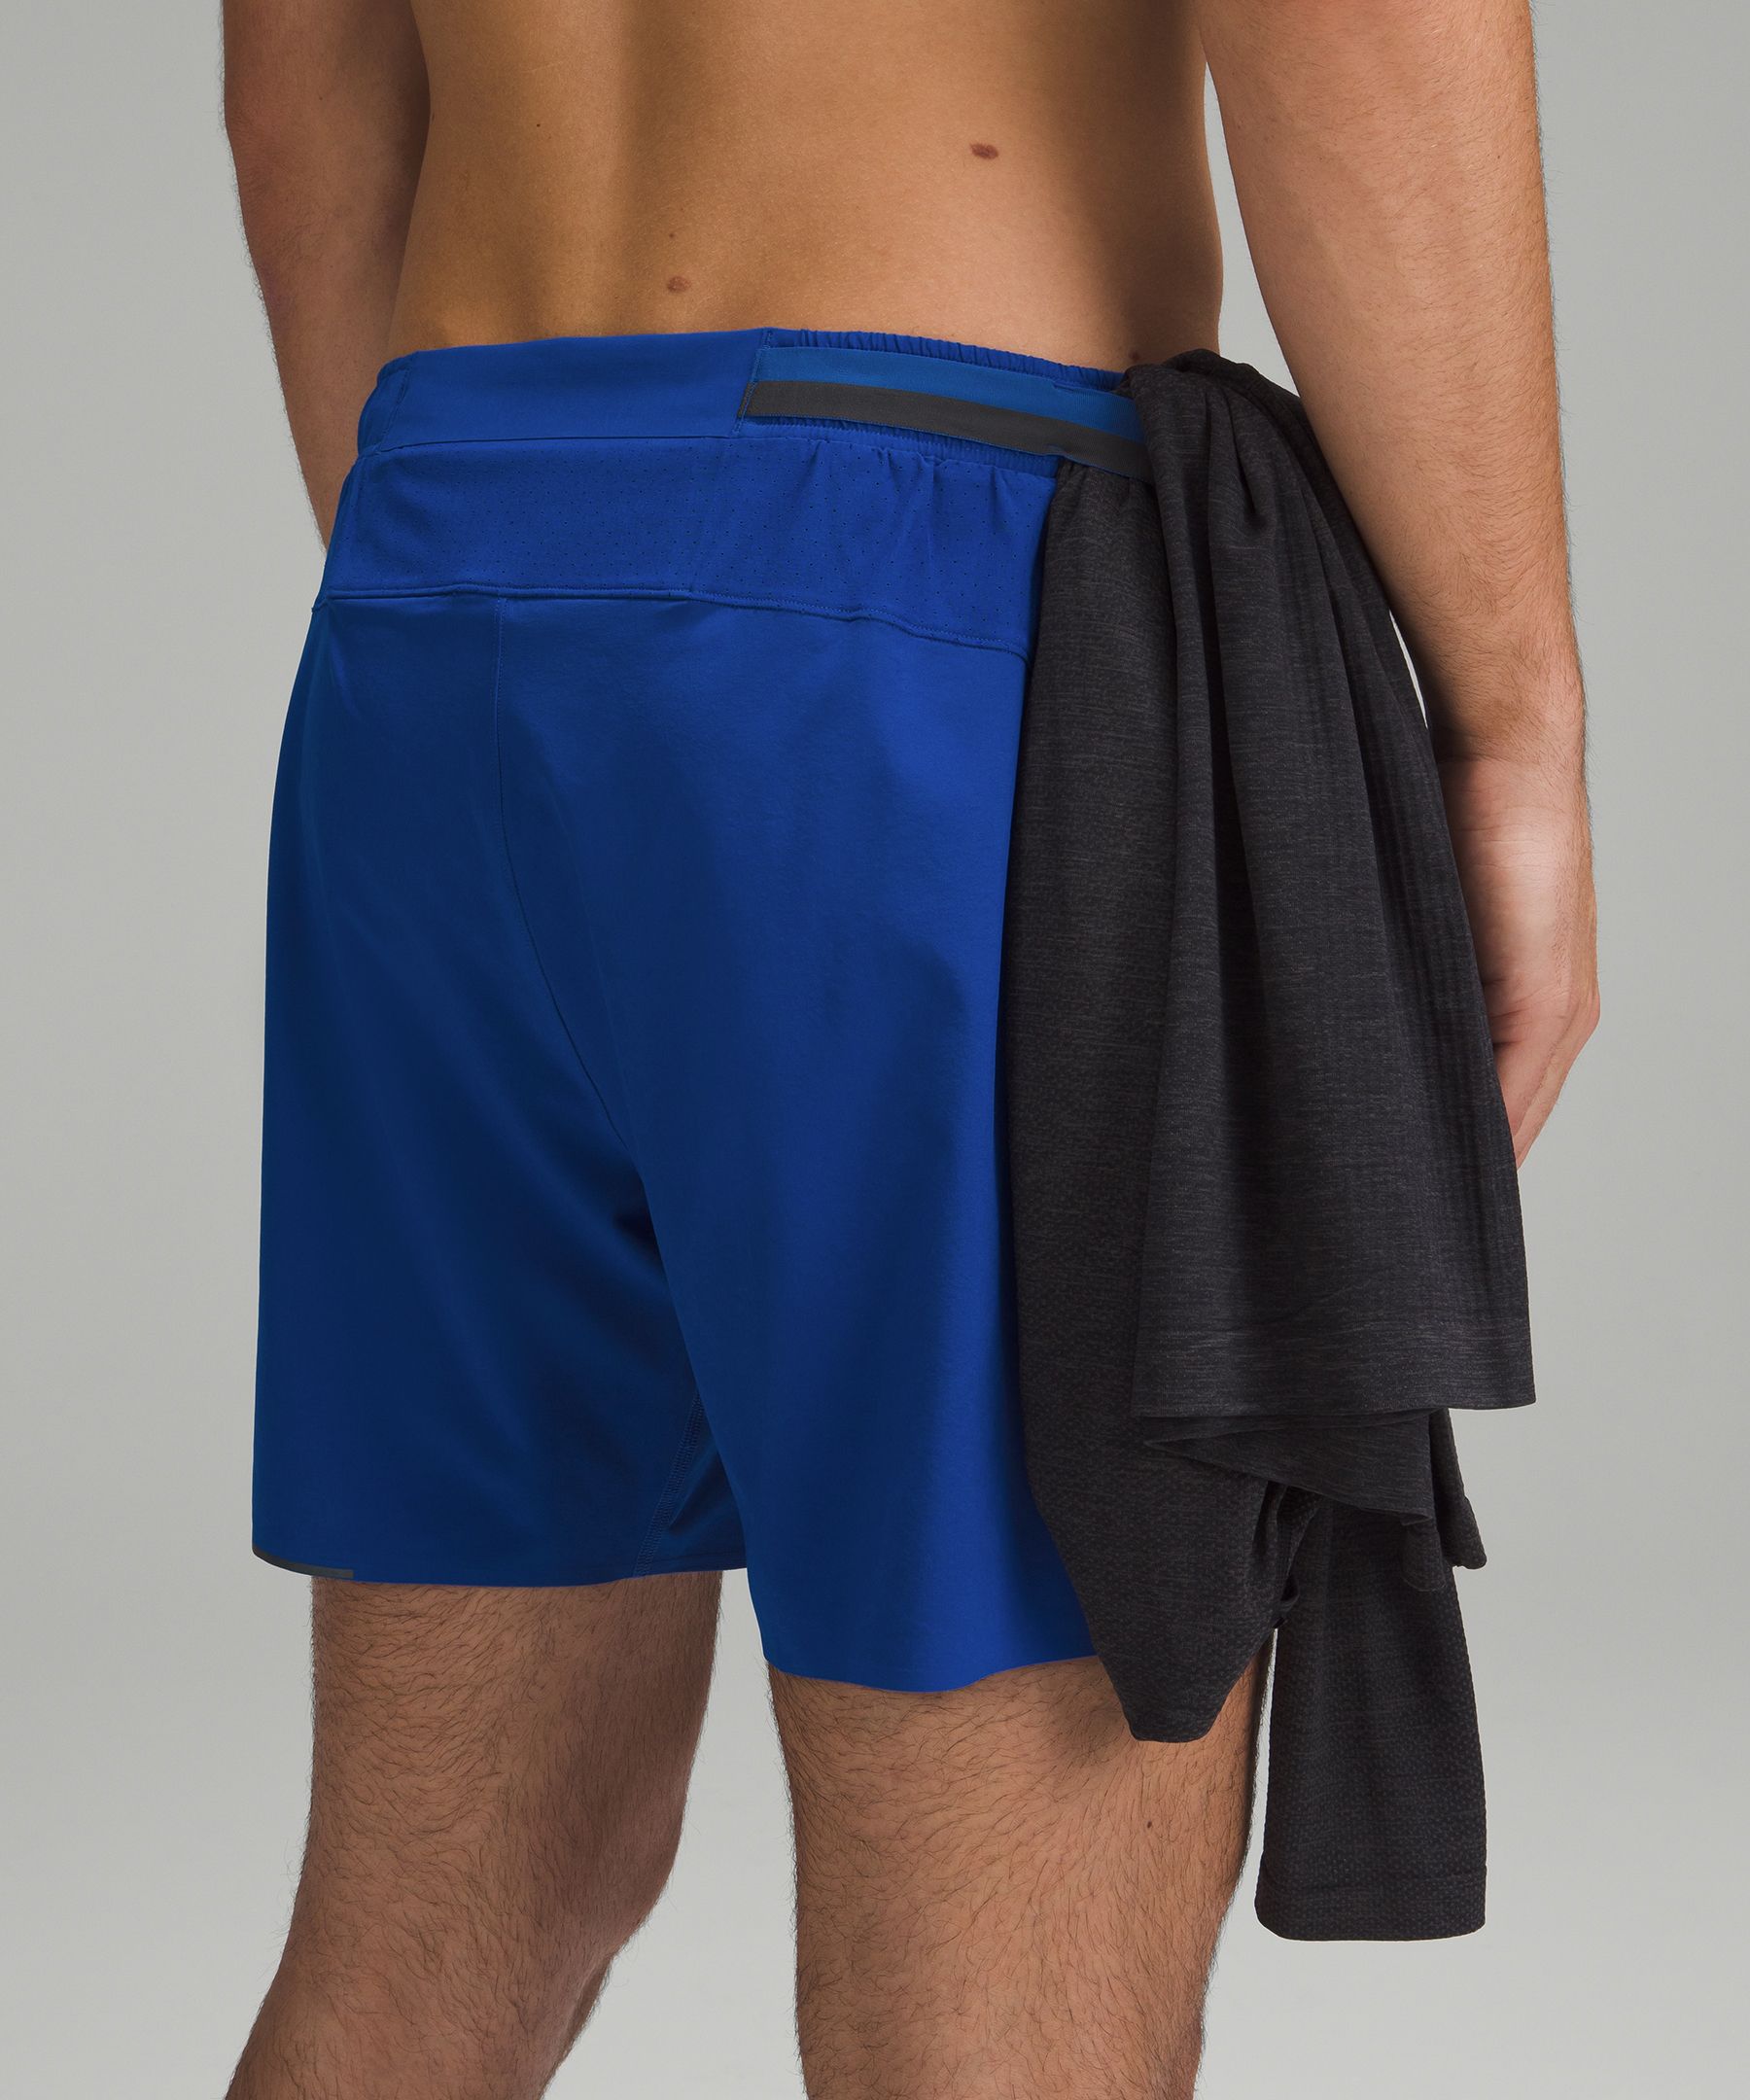 lululemon athletica Surge Lined Shorts - 6 - Color Blue - Size L for Men